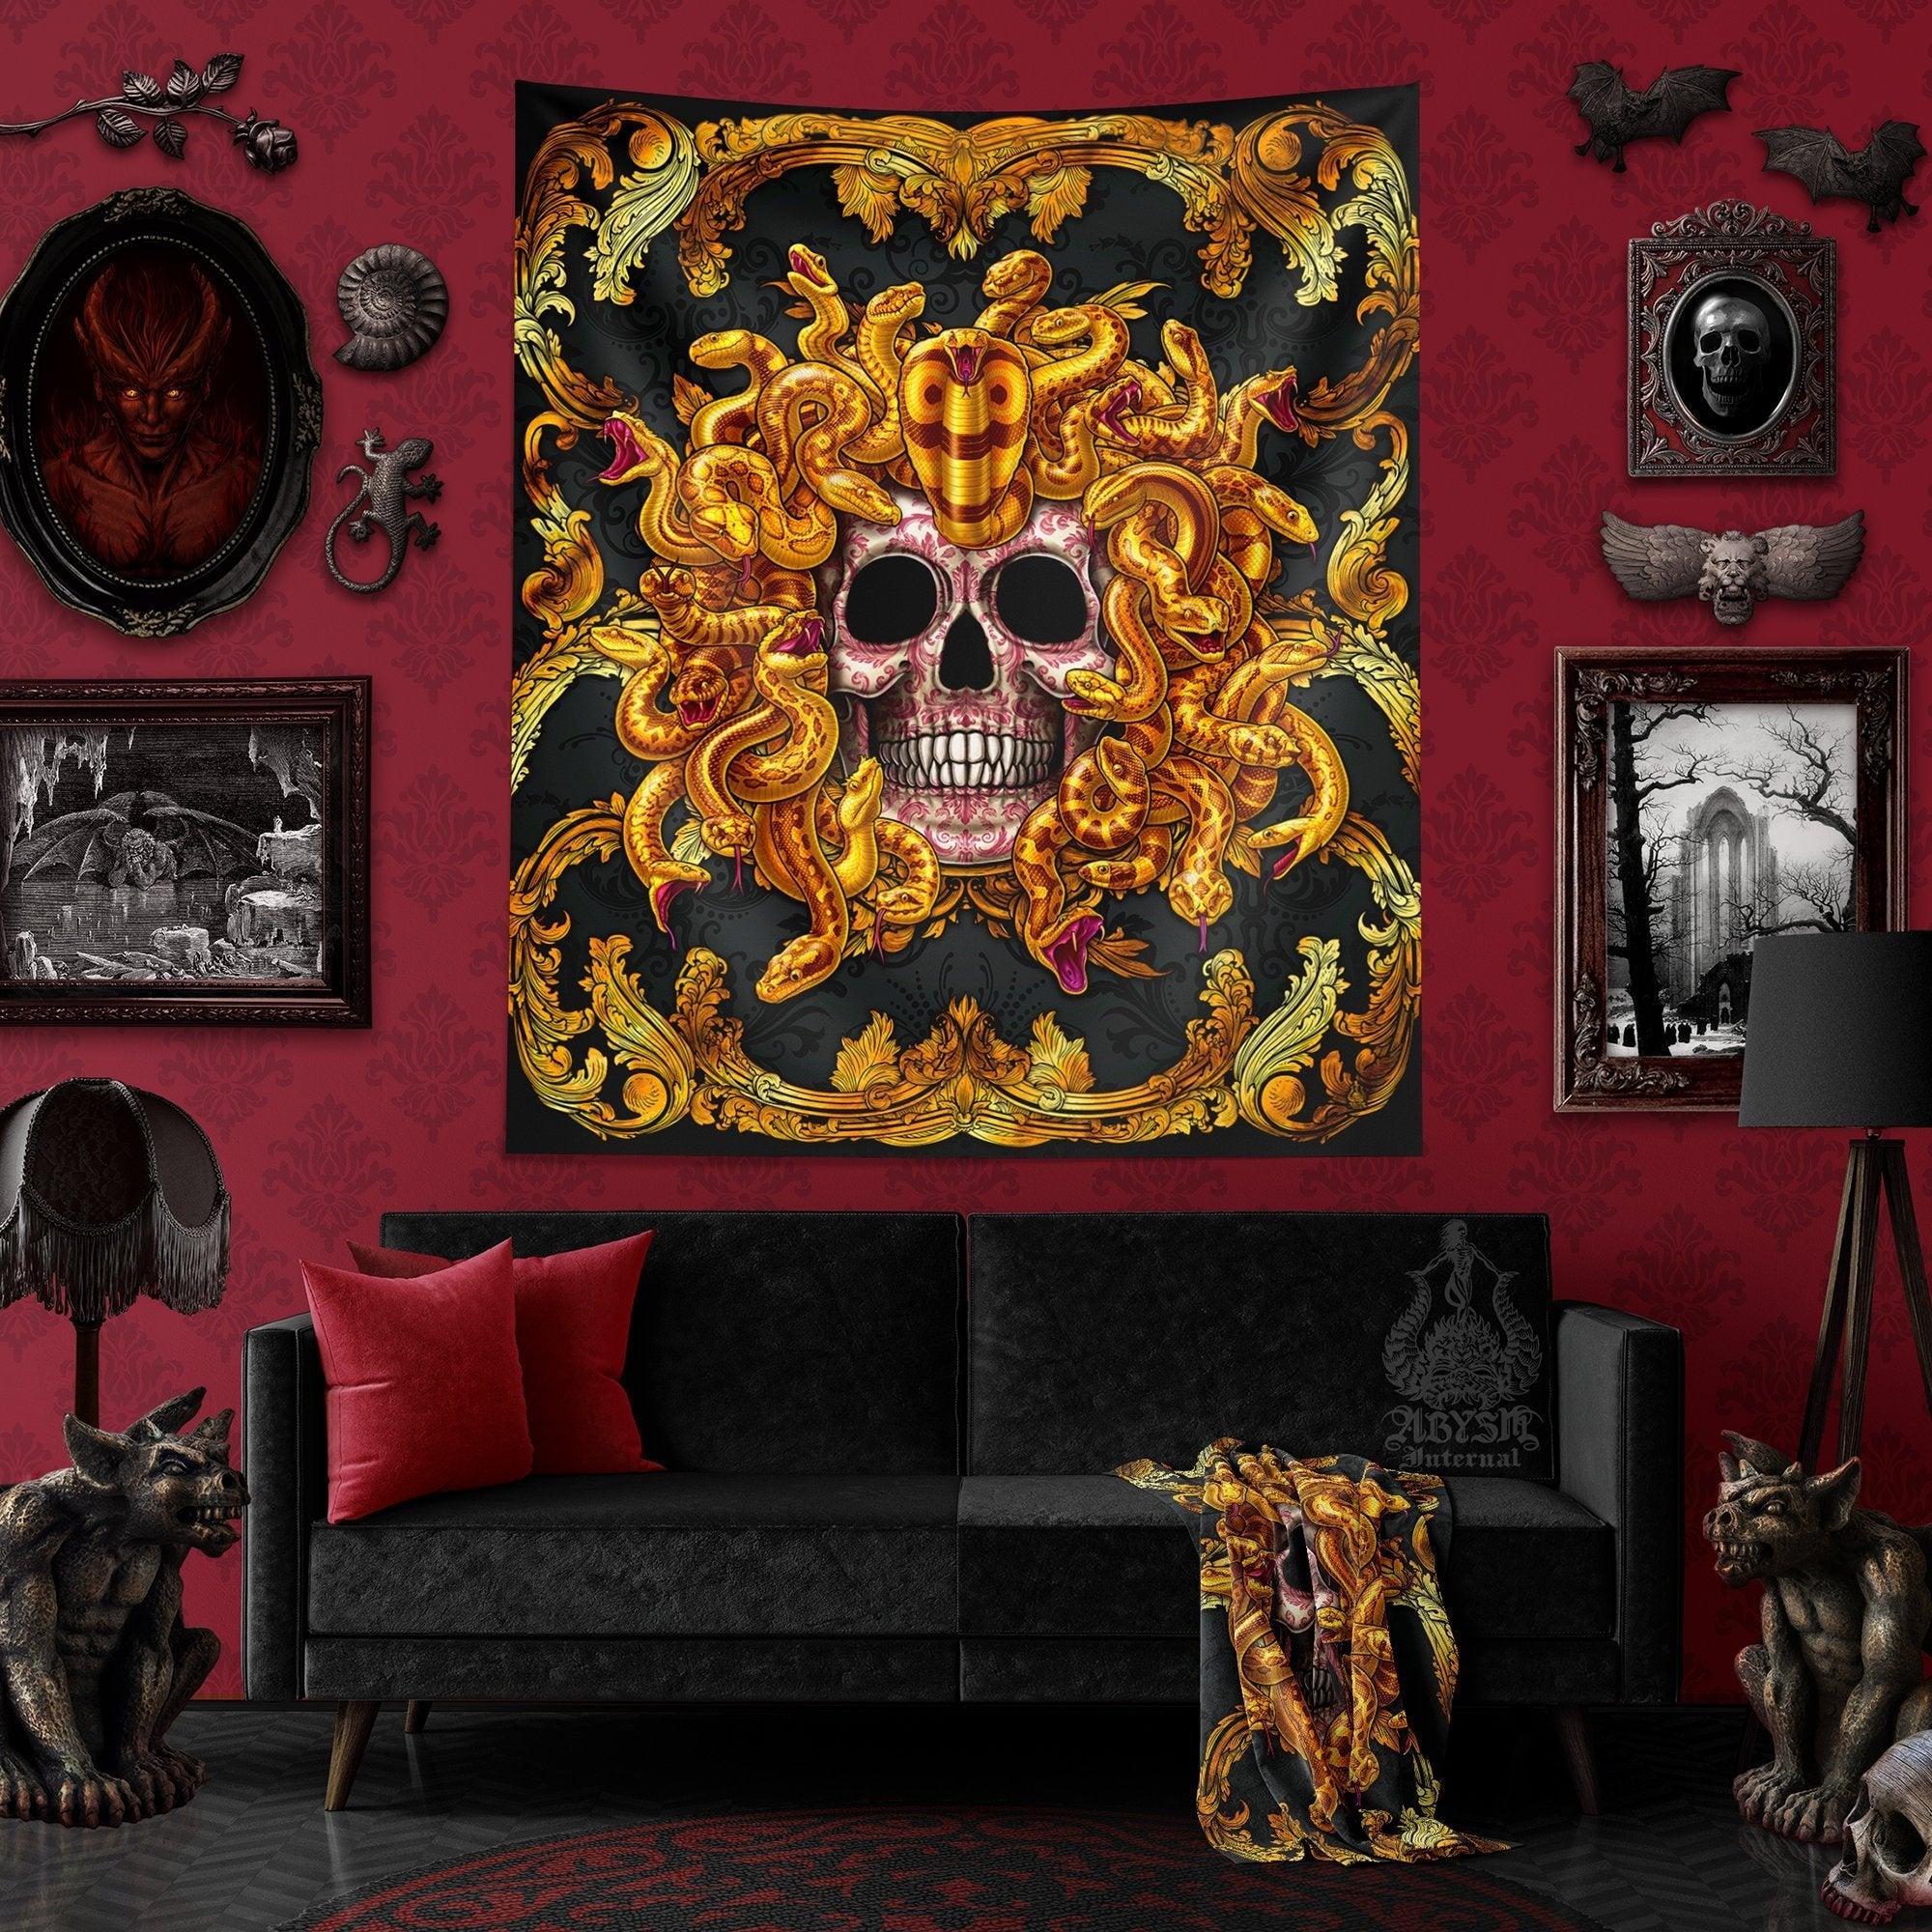 Skull Tapestry, Medusa Art Print, Macabre Decor - Gold Snakes - Abysm Internal